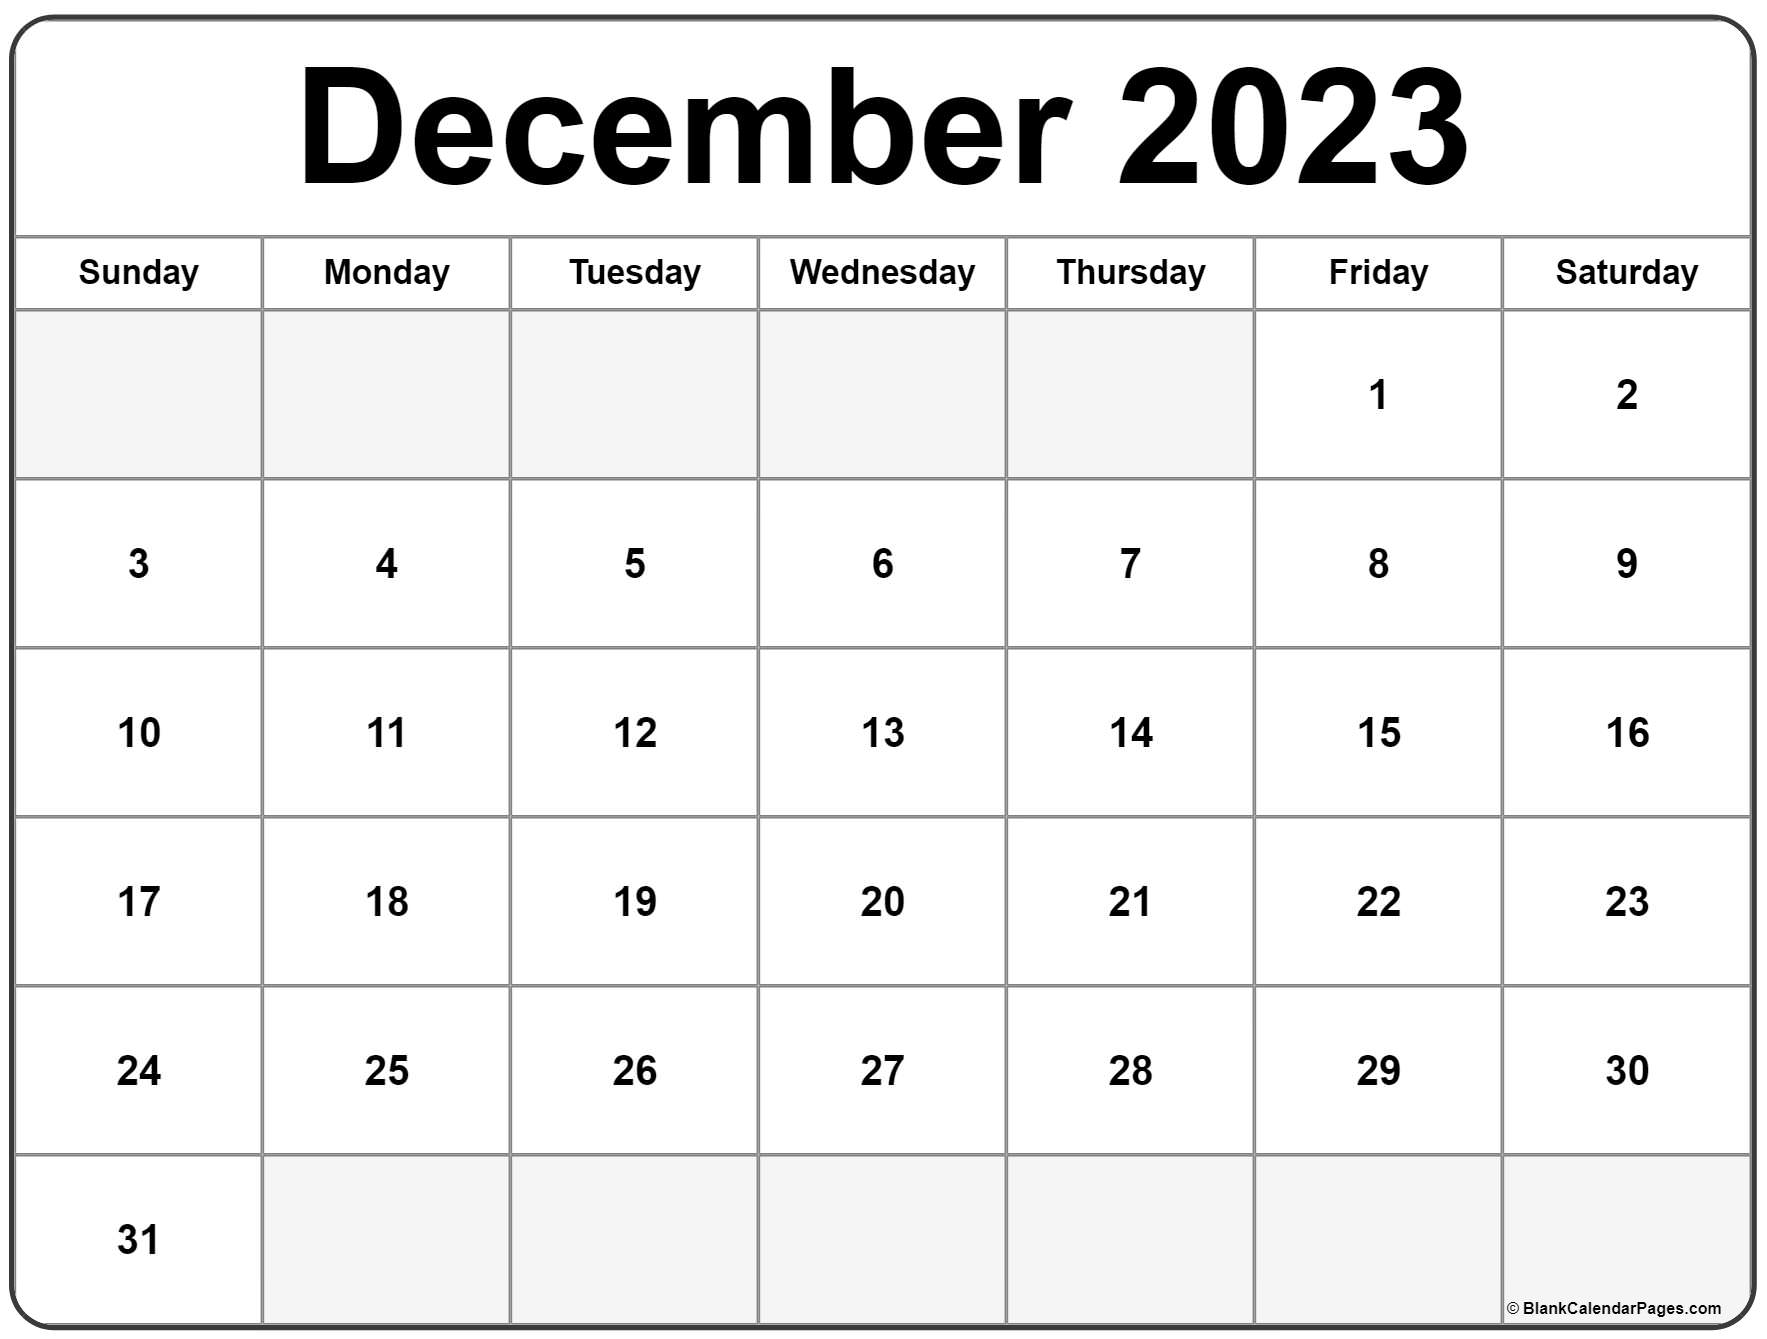 December 2023 Calendar Free Printable Calendar December 2023 Calendar Free Printable Calendar 